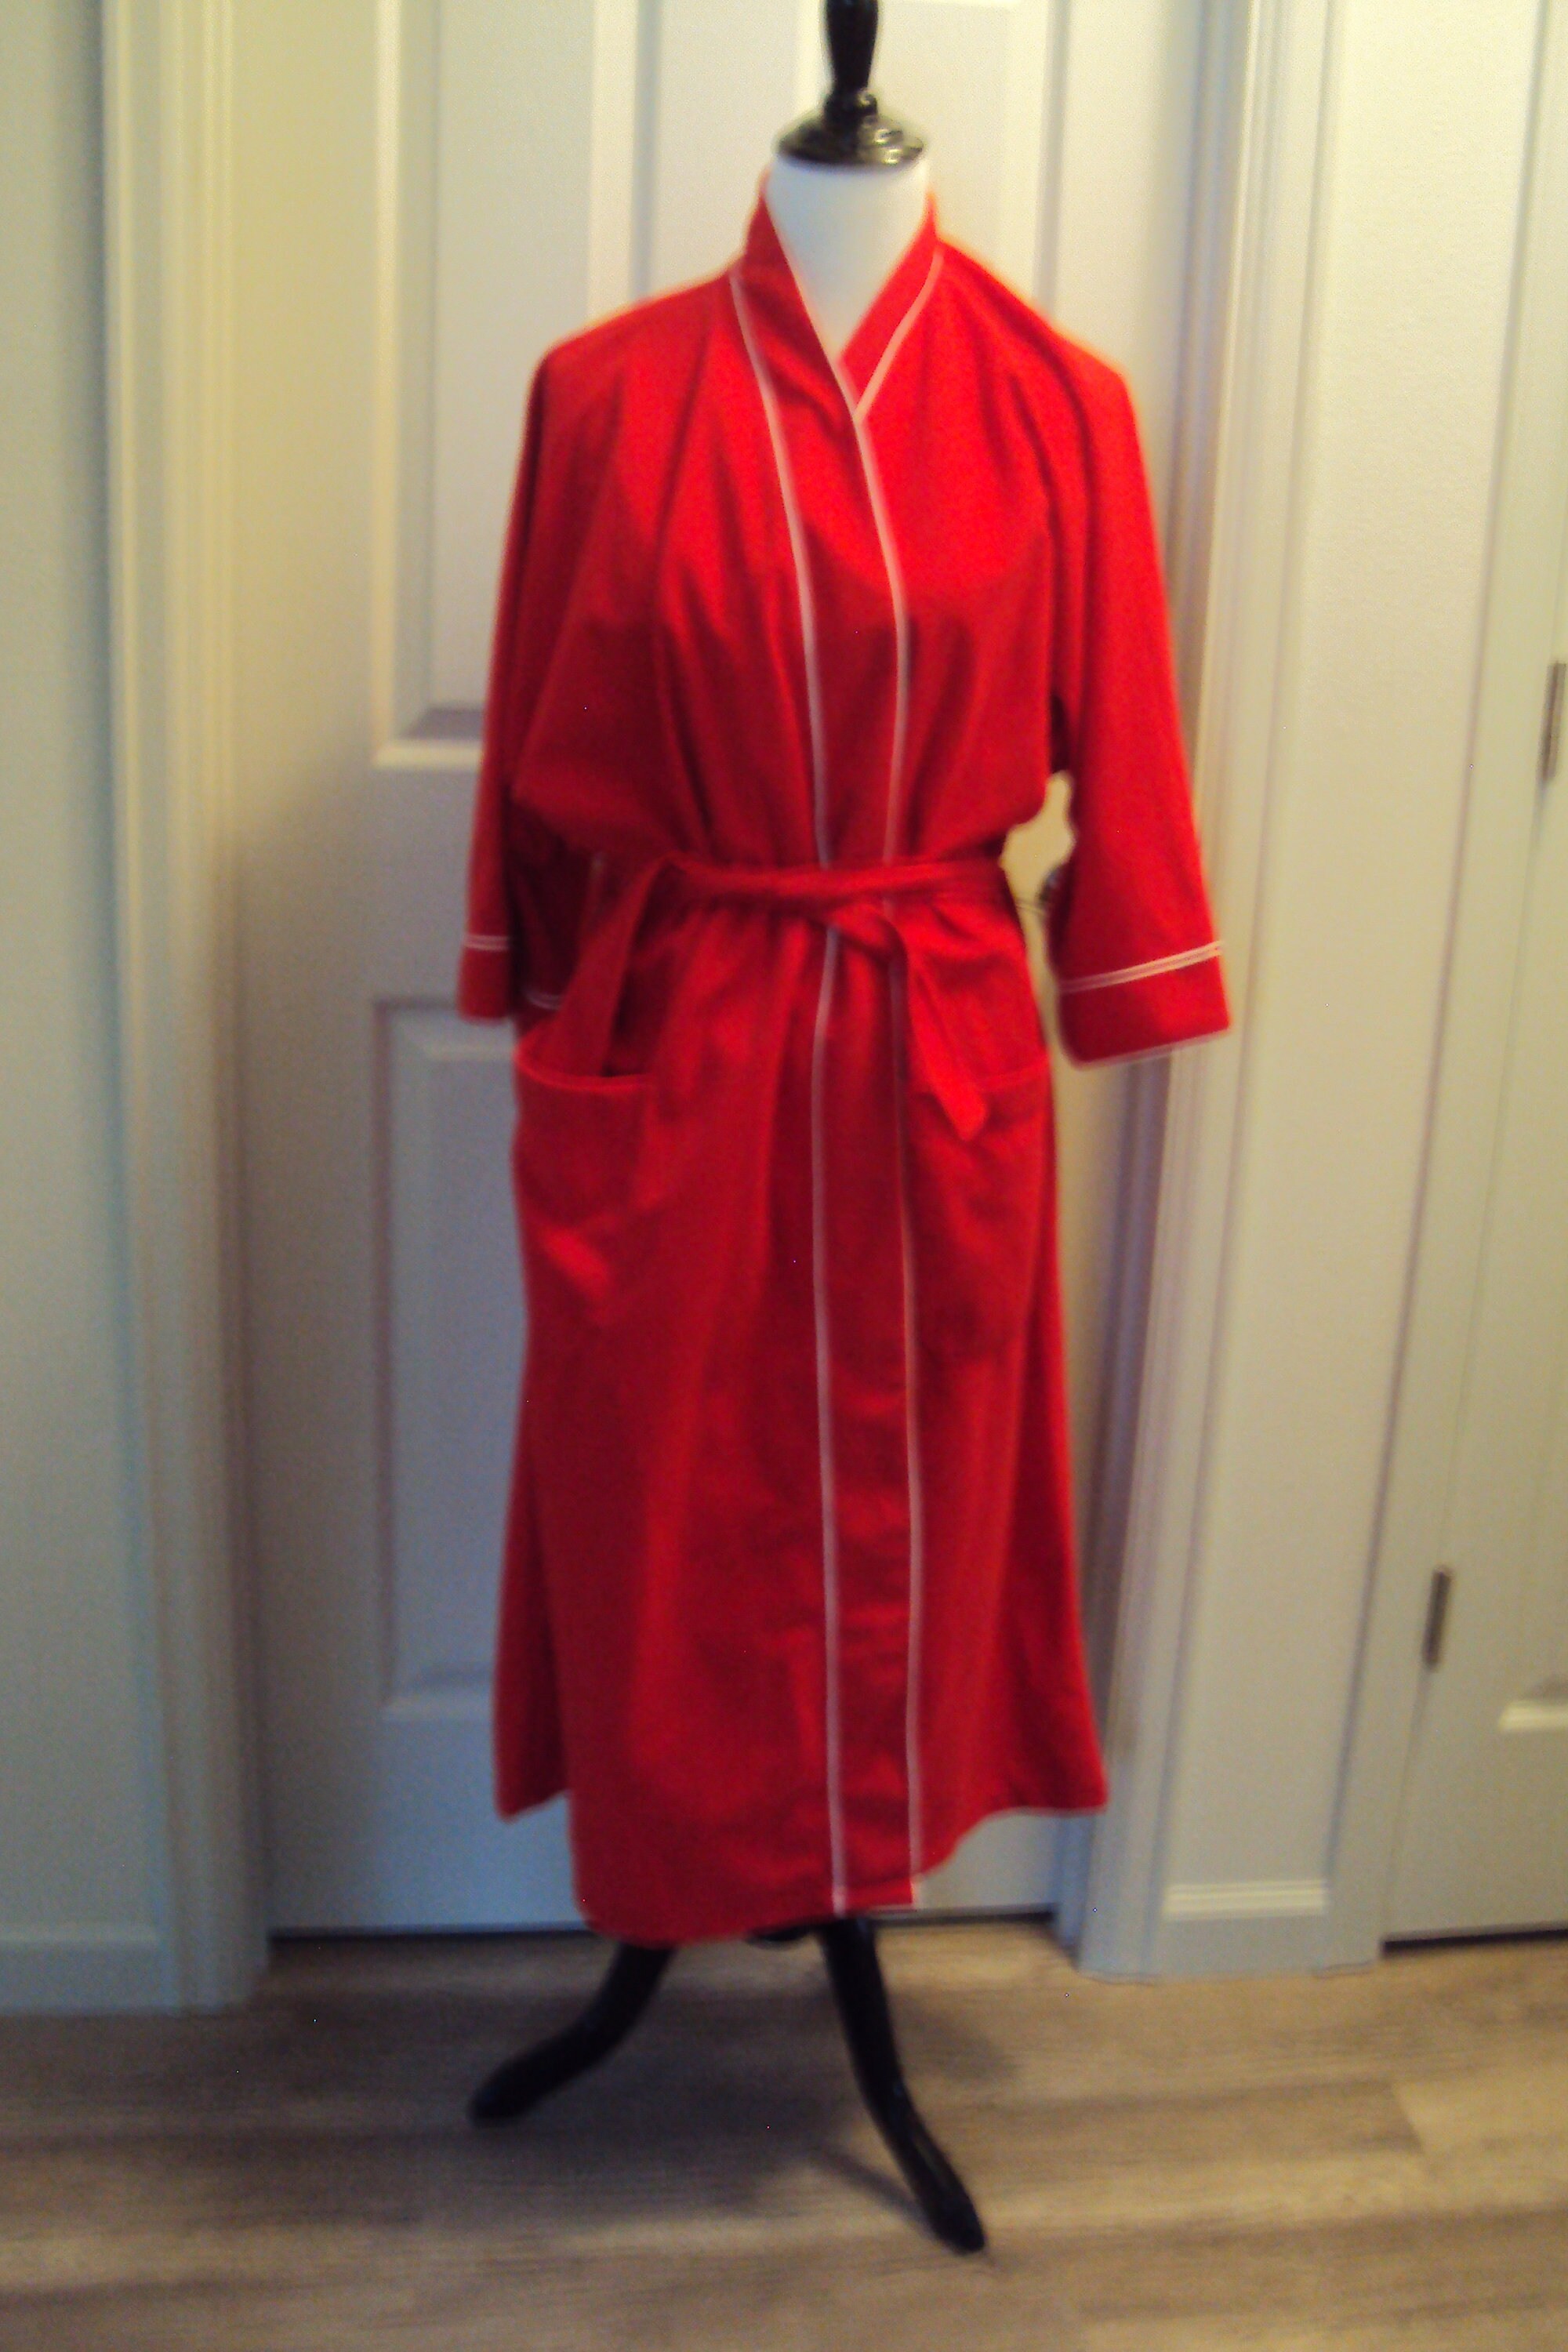 Kleding Herenkleding Pyjamas & Badjassen Jurken 70s Robe Mens Dressing Gown New Old Stock Vintage 1970s Housecoat Shawl Collar Smoking Jacket 